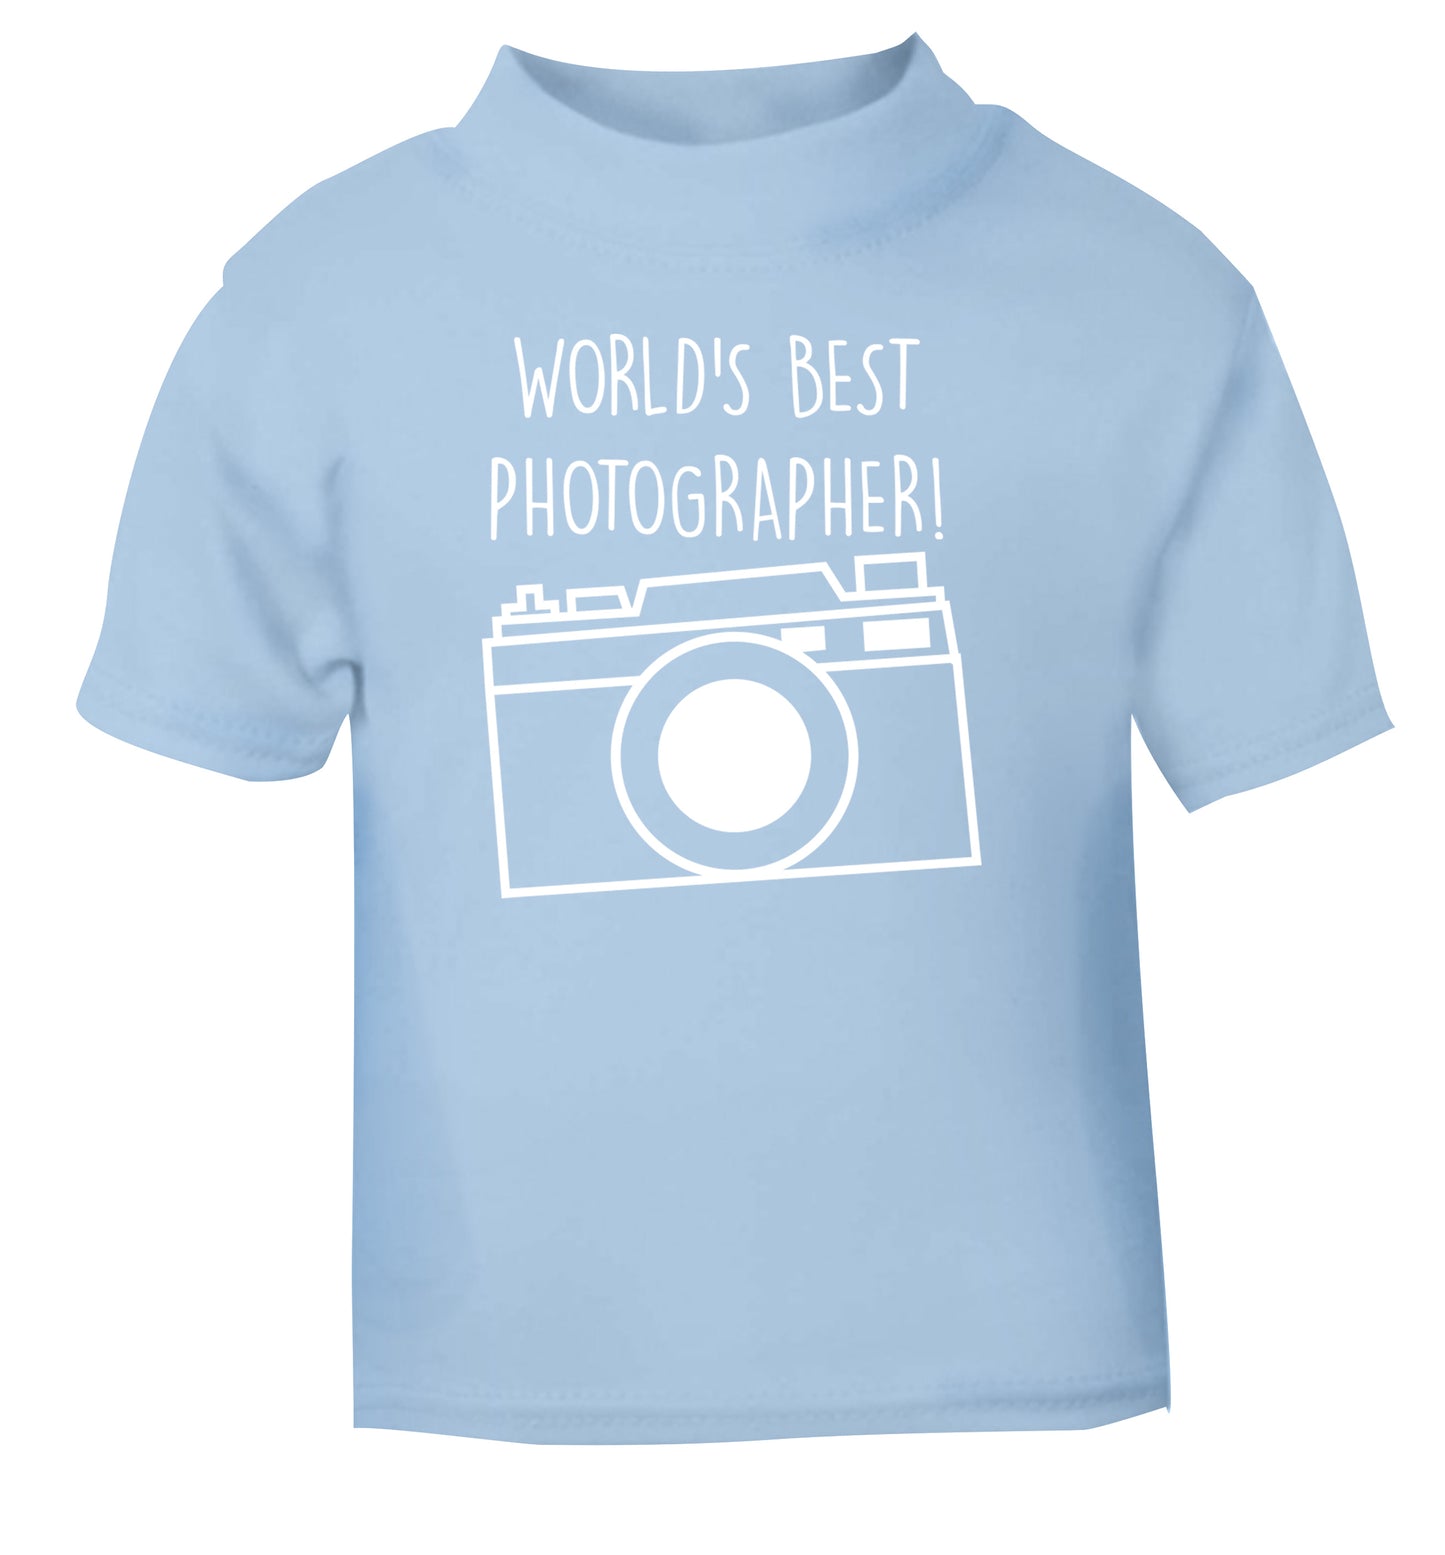 Worlds best photographer  light blue Baby Toddler Tshirt 2 Years